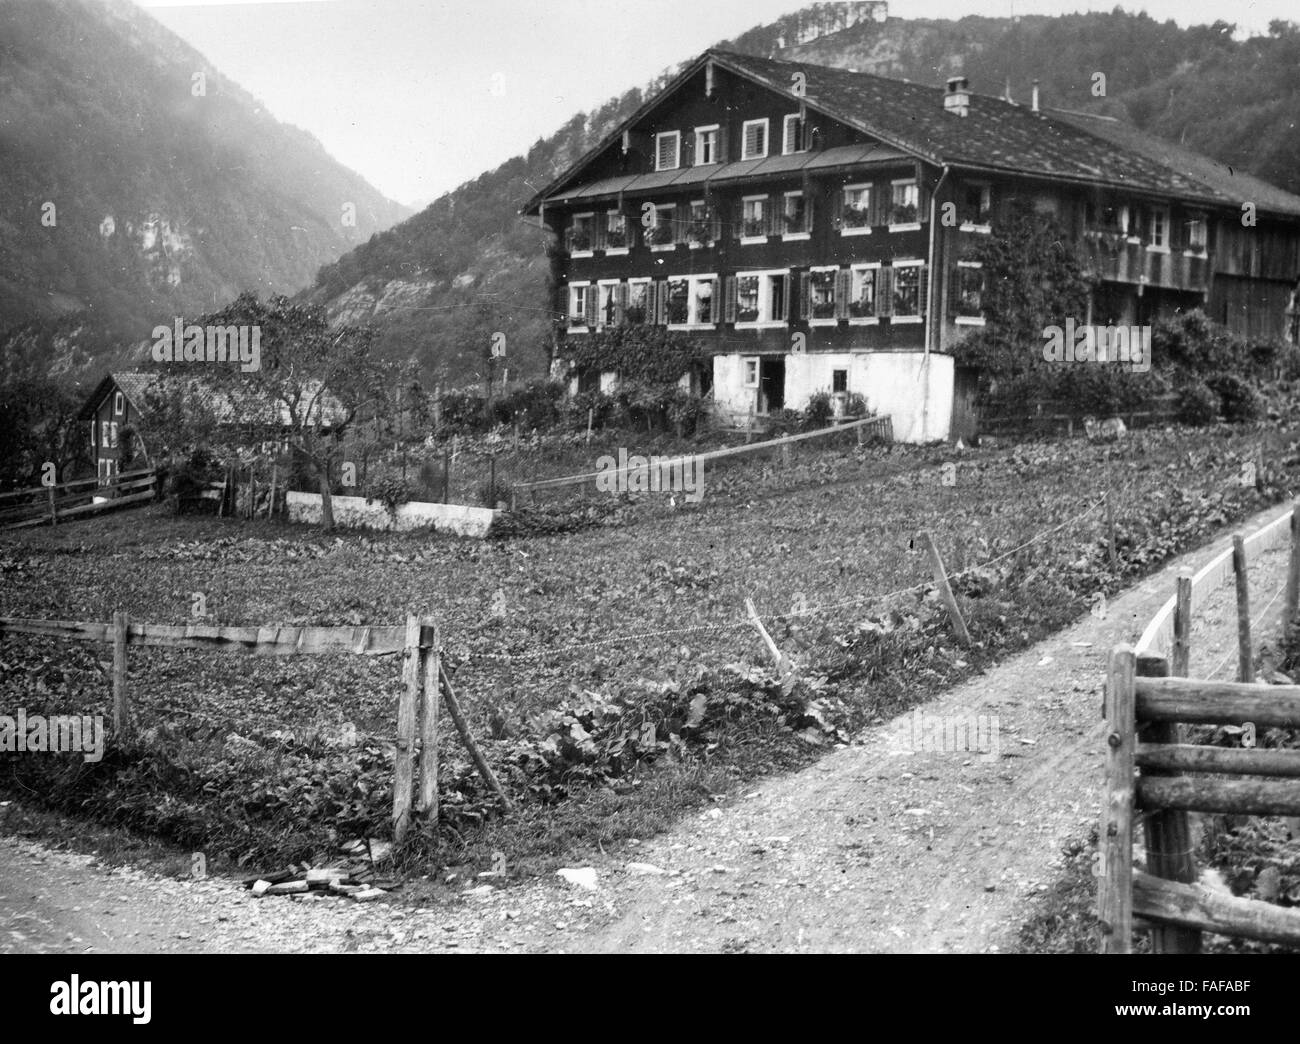 Bergbauernhaus di Seelisberg im Kanton Uri, Schweiz 1930er Jahre. Montagna casa del contadino a Seelisberg nel canton Uri, Svizzera 1930s. Foto Stock